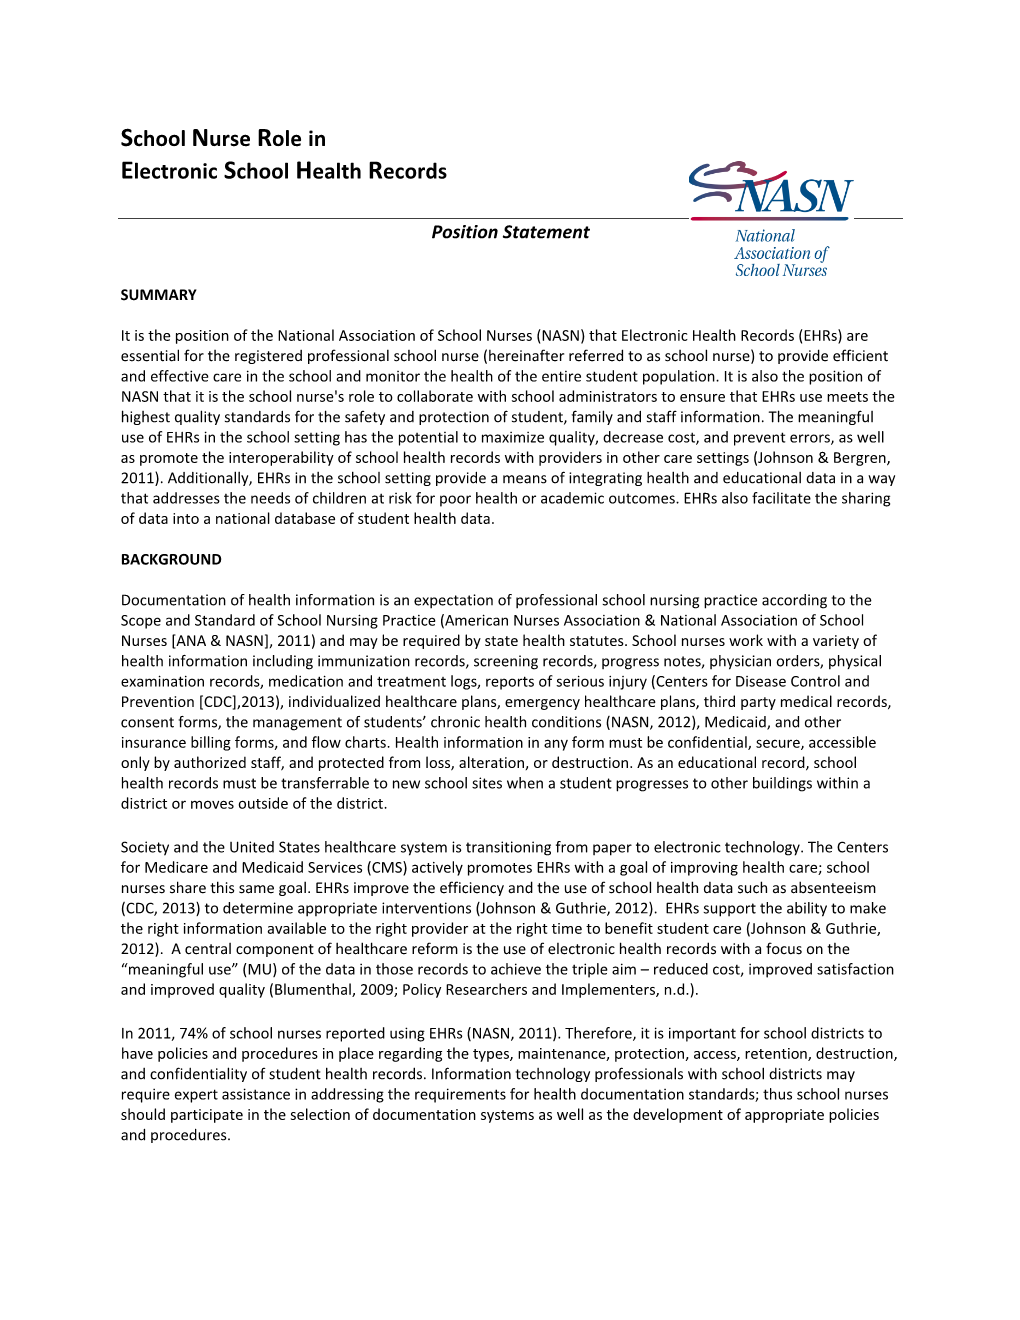 School Nurse Role in Electronic School Health Records